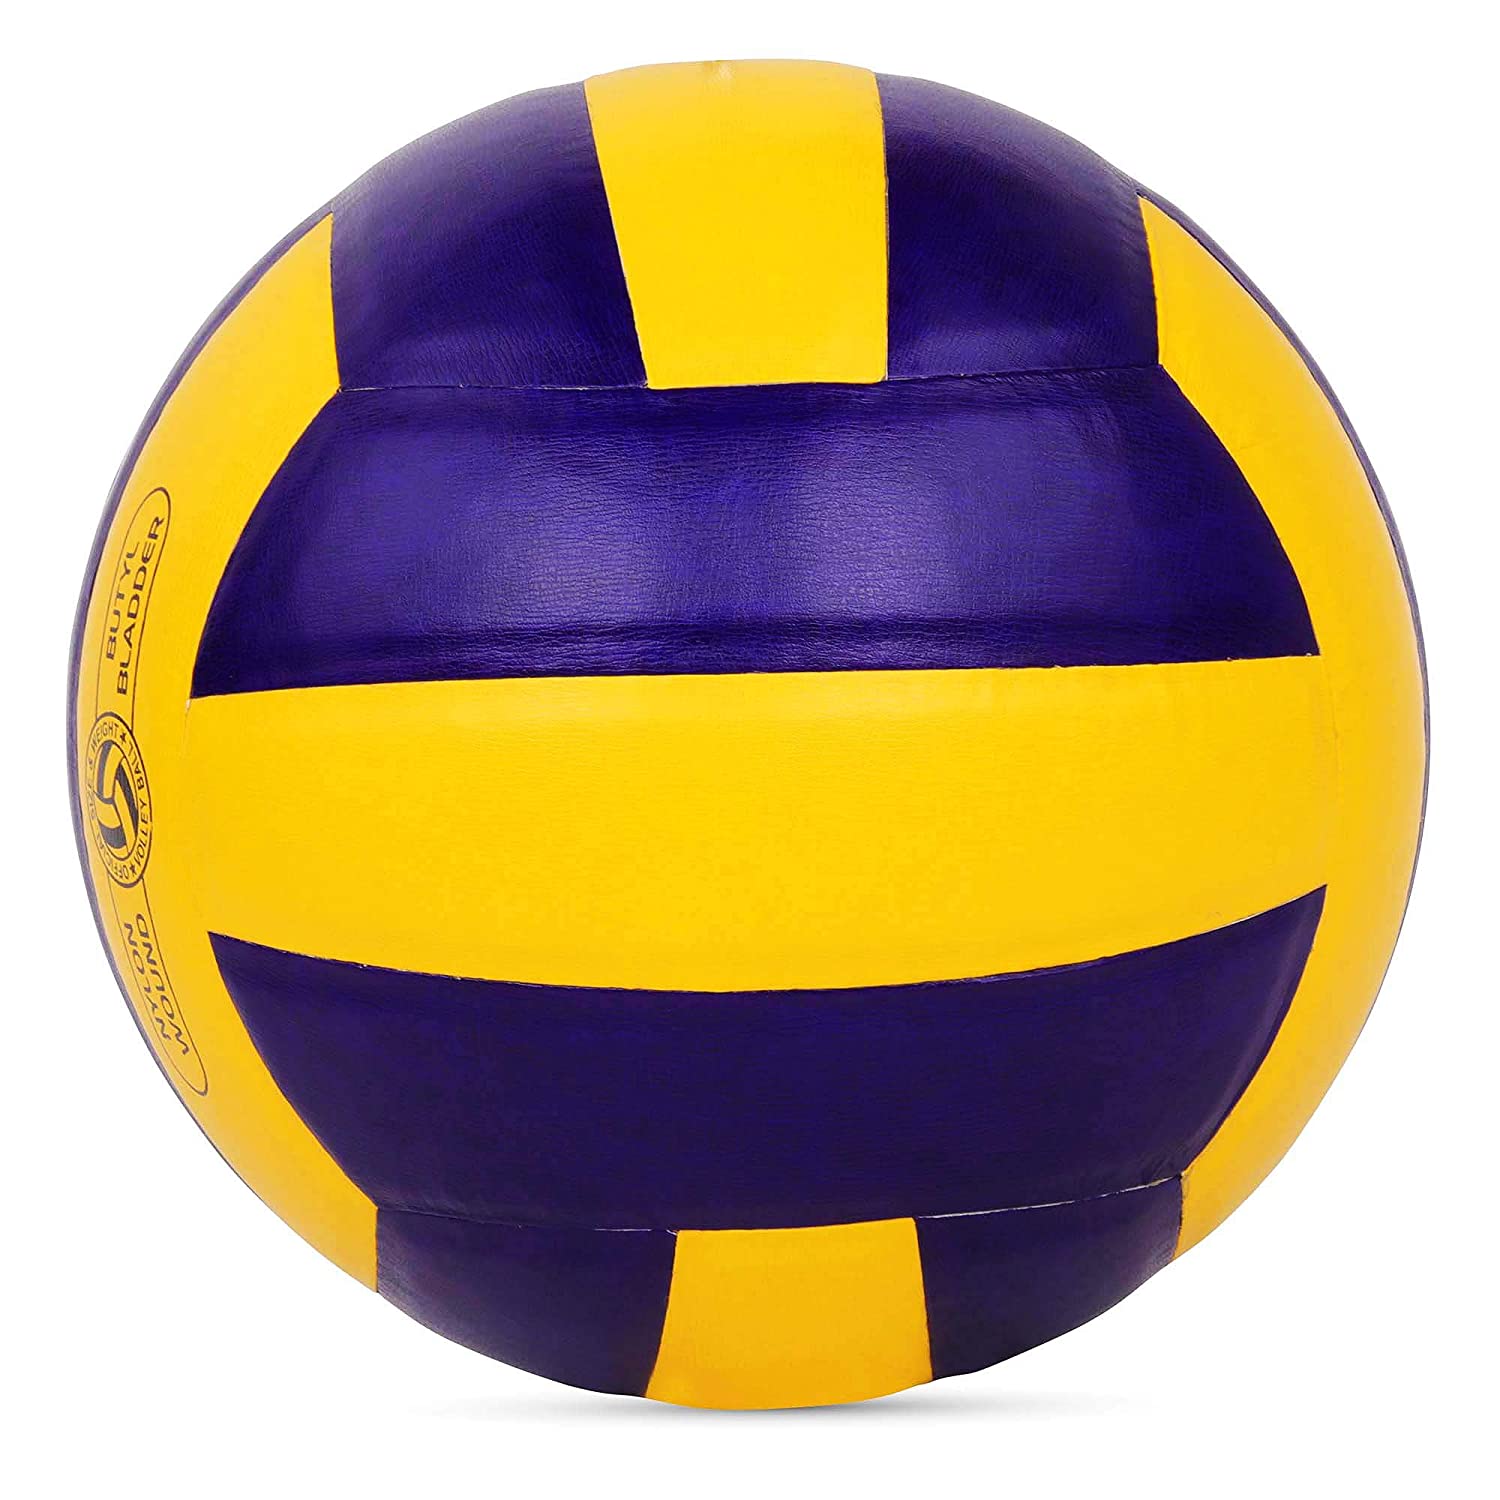 Cosco Acclaim Volleyball, Size 4 - Best Price online Prokicksports.com